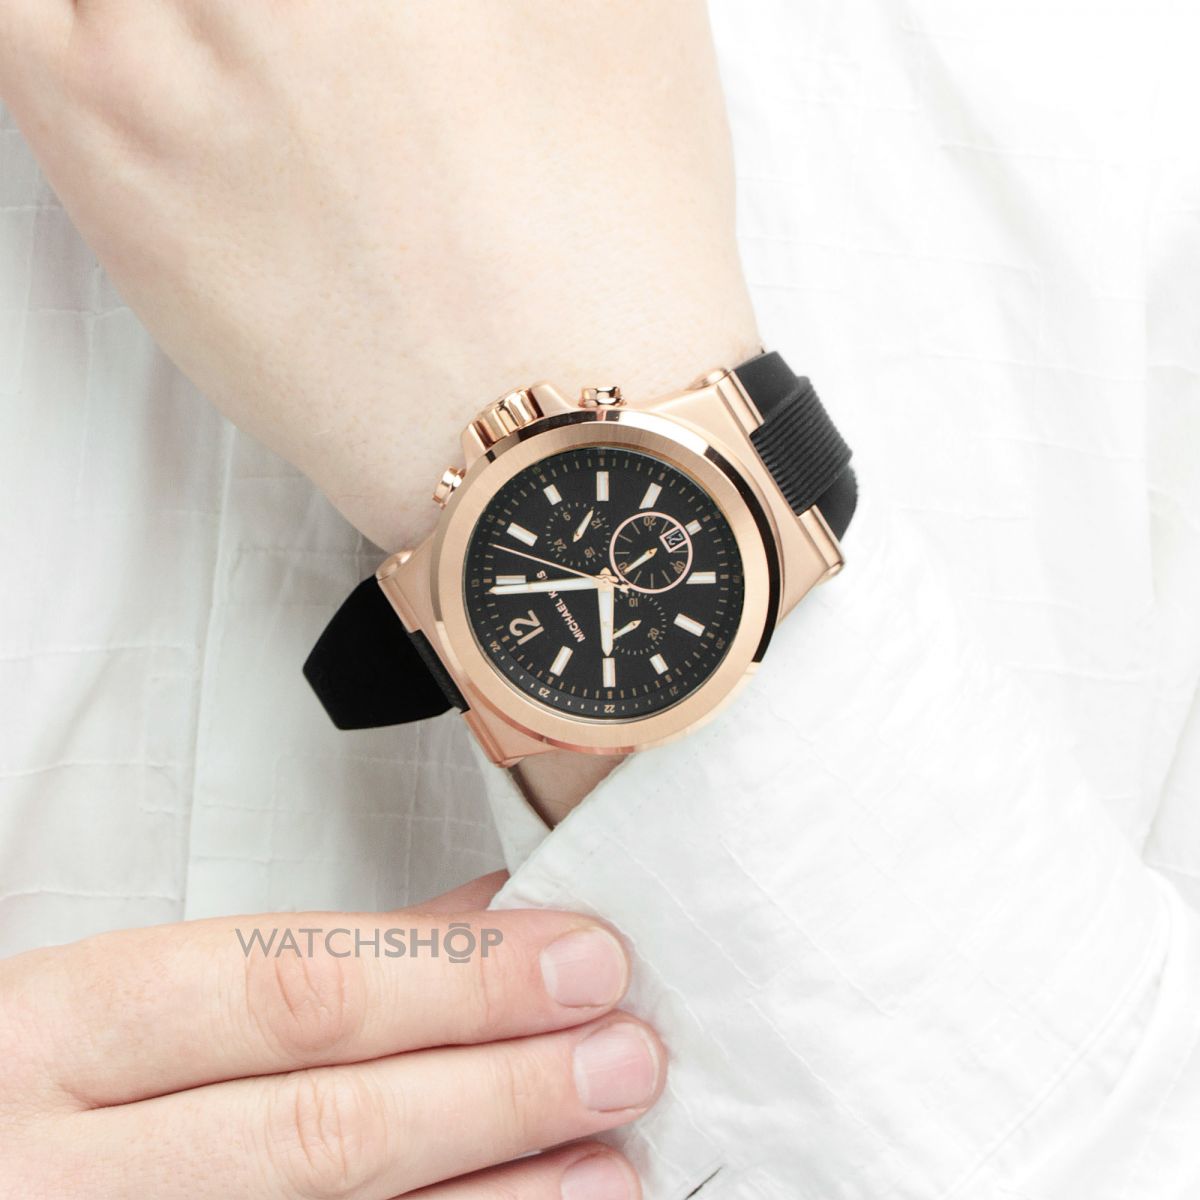 Michael Kors MK8184 47mm Rose Gold Men's Watch Review - The Watch Blog